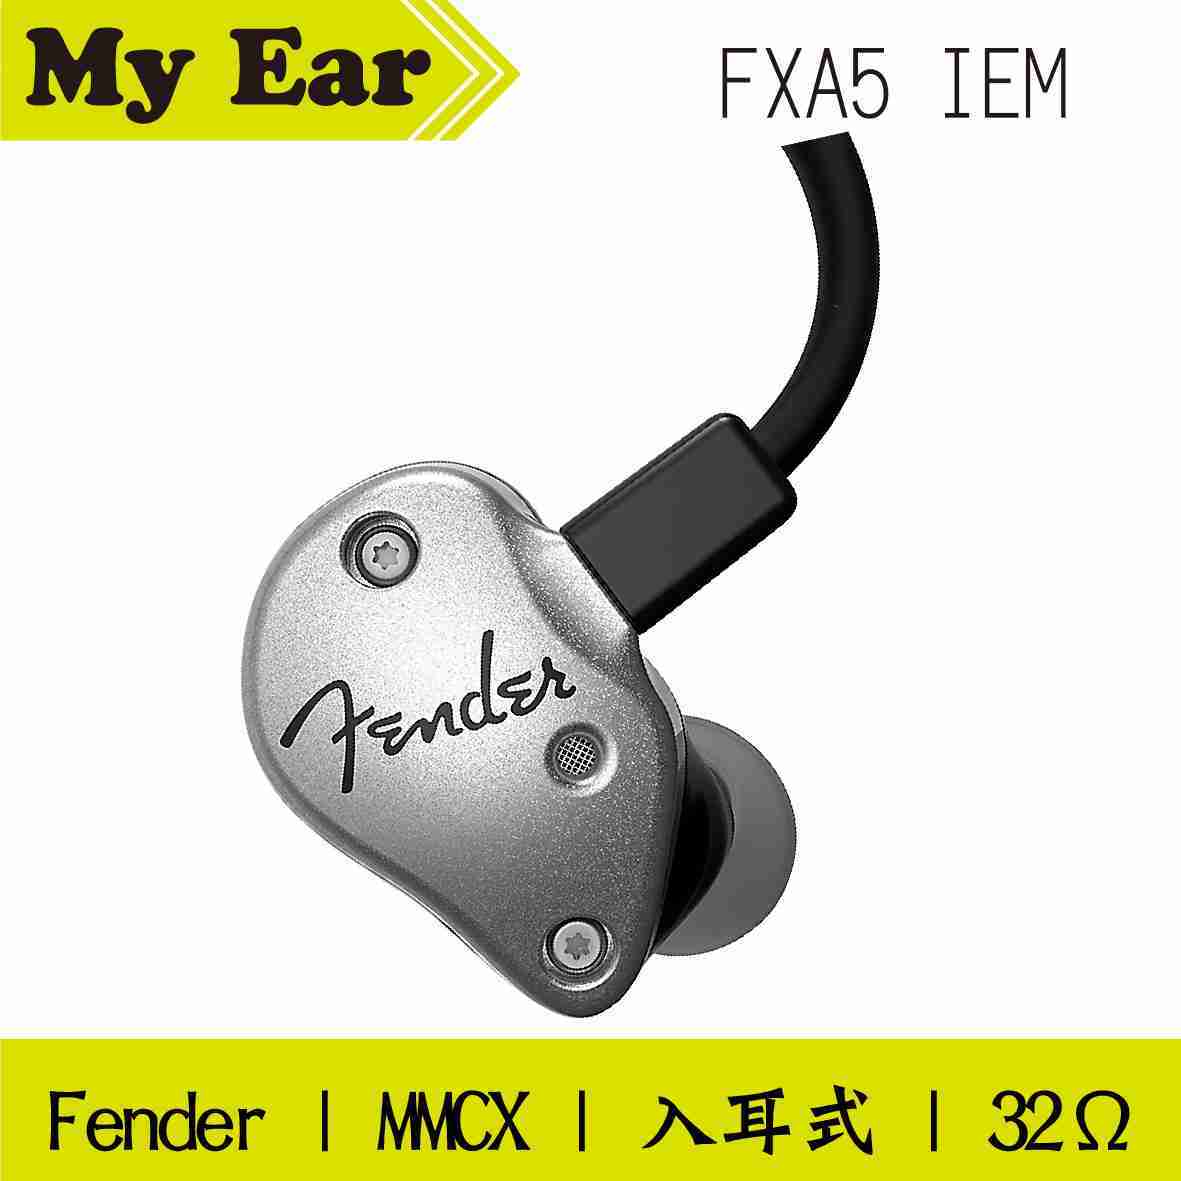 Fender FXA5 IEM 銀色 入耳式監聽耳機 | My Ear耳機專門店